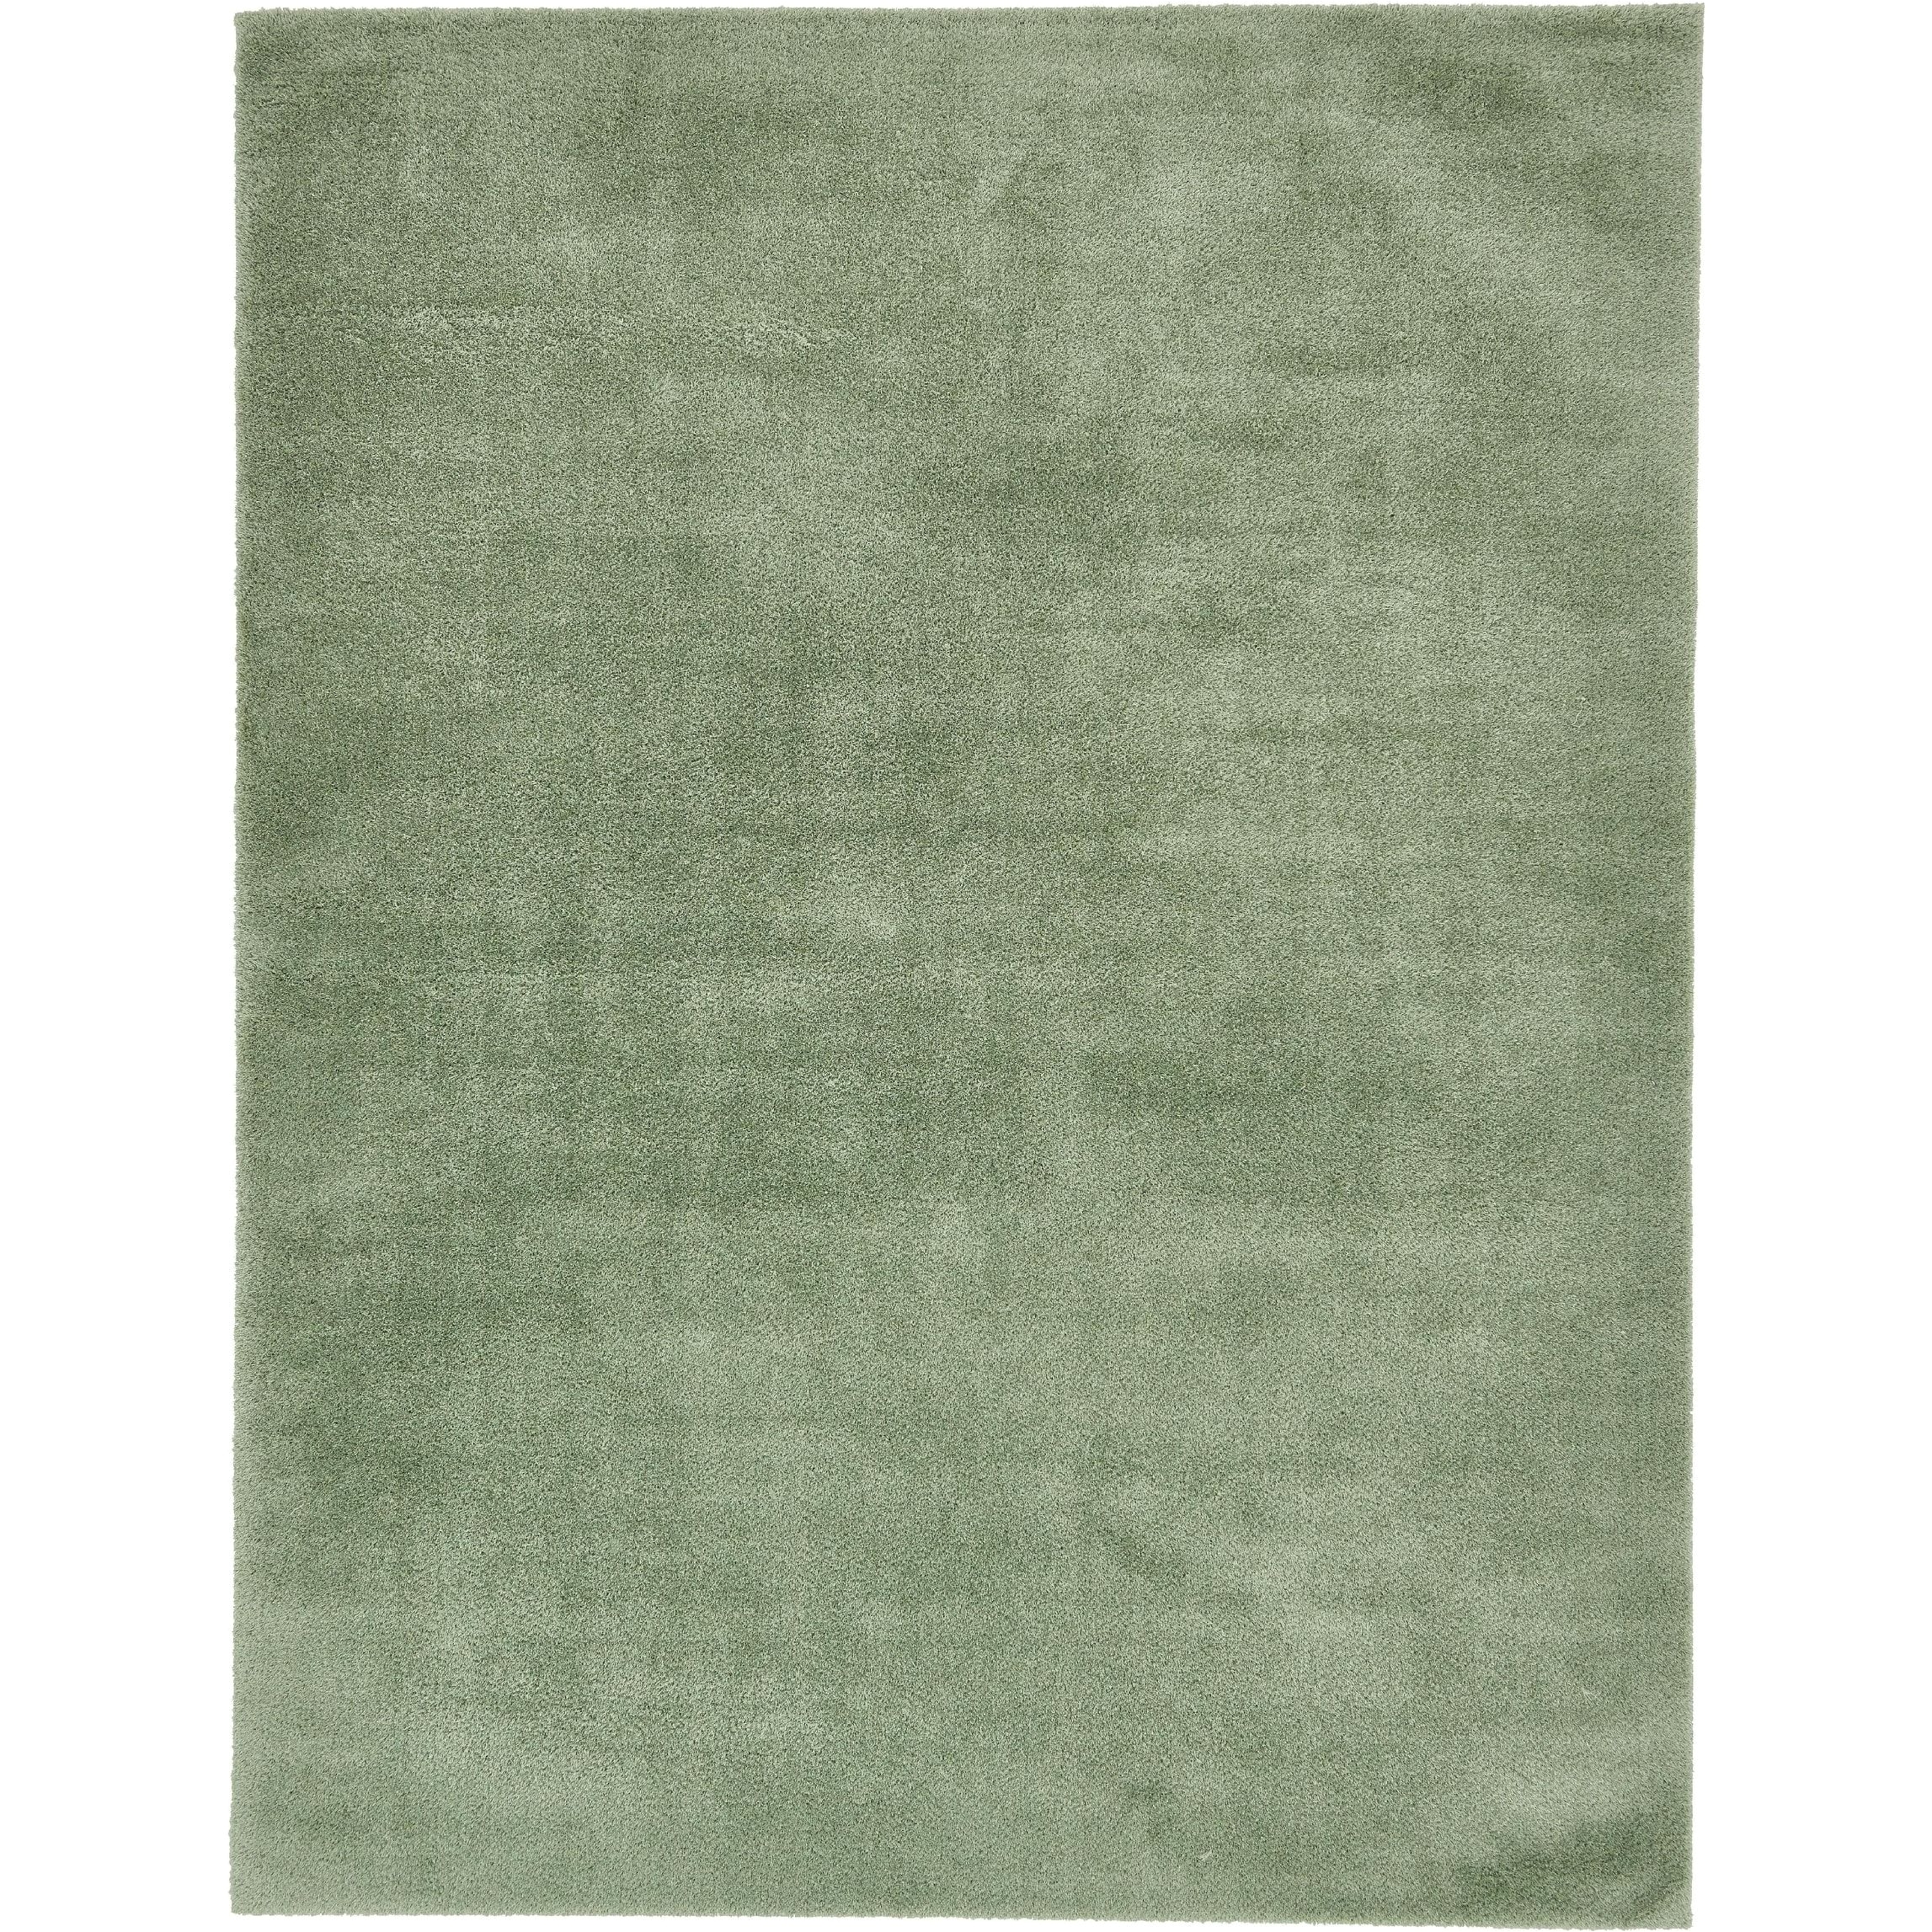 unique turkish light grey cream solid shag area rug 9 x 12 charcoal size 9 x 12